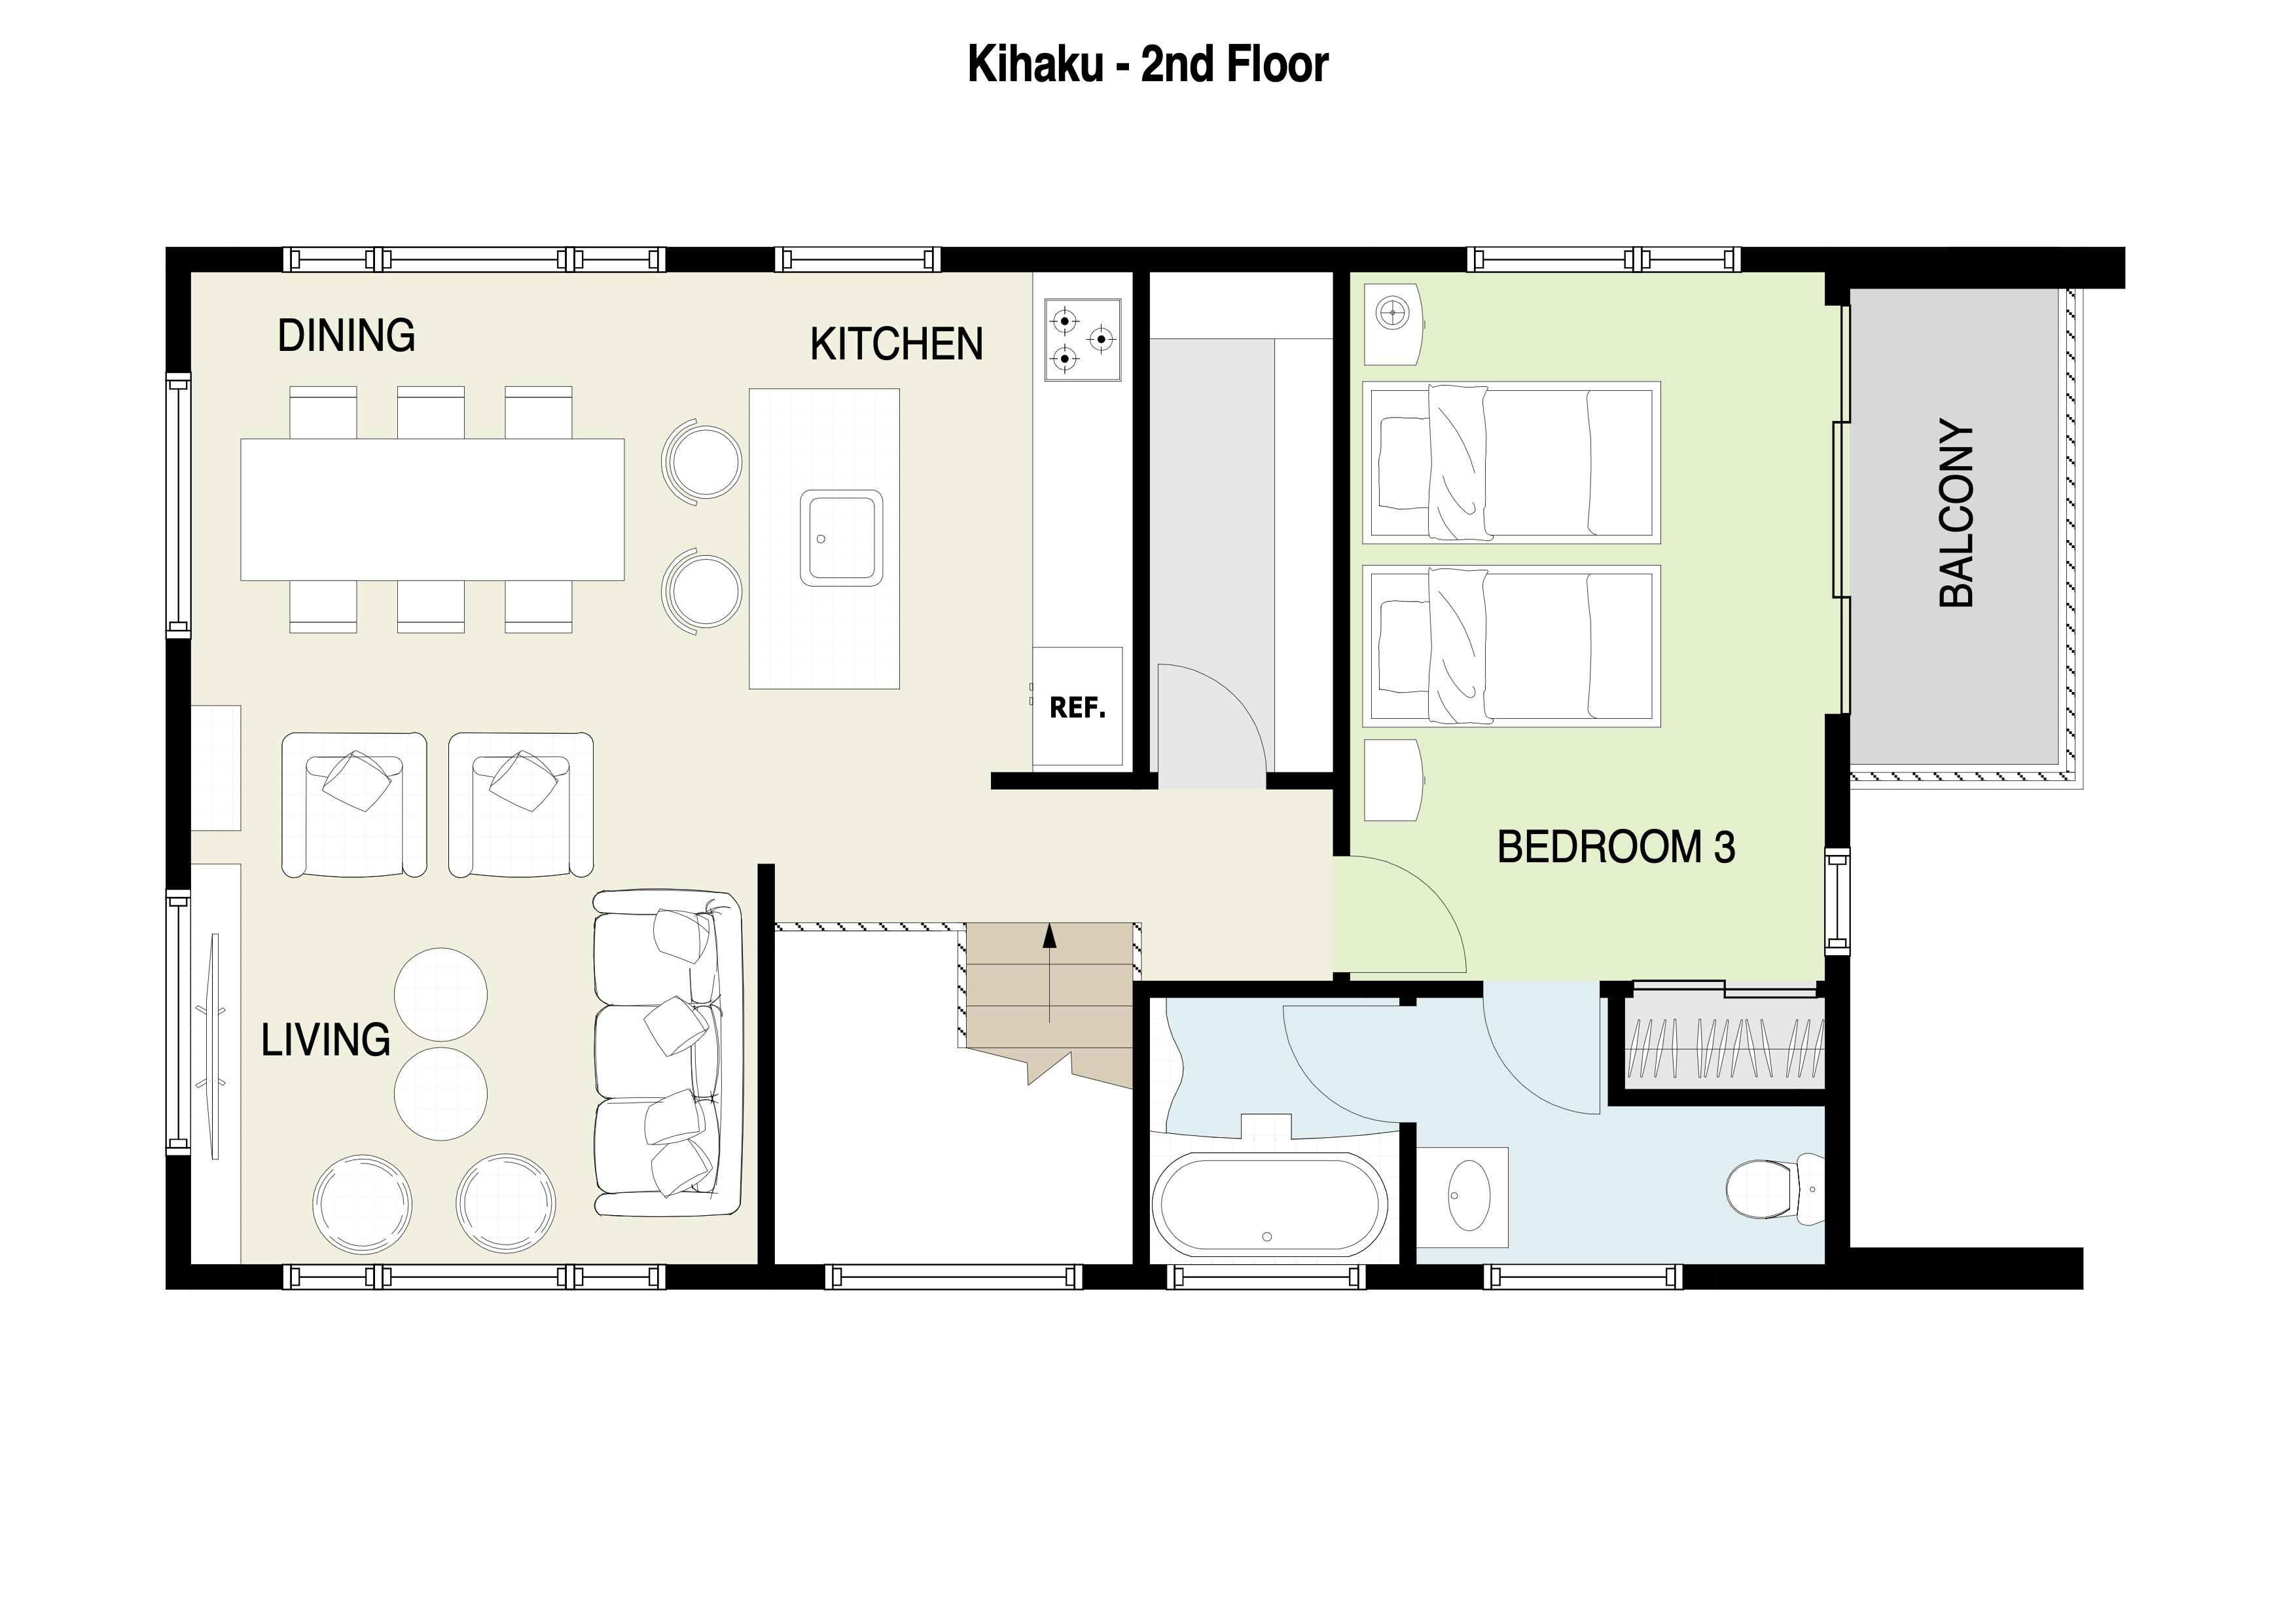 Kihaku Second Floor Plan